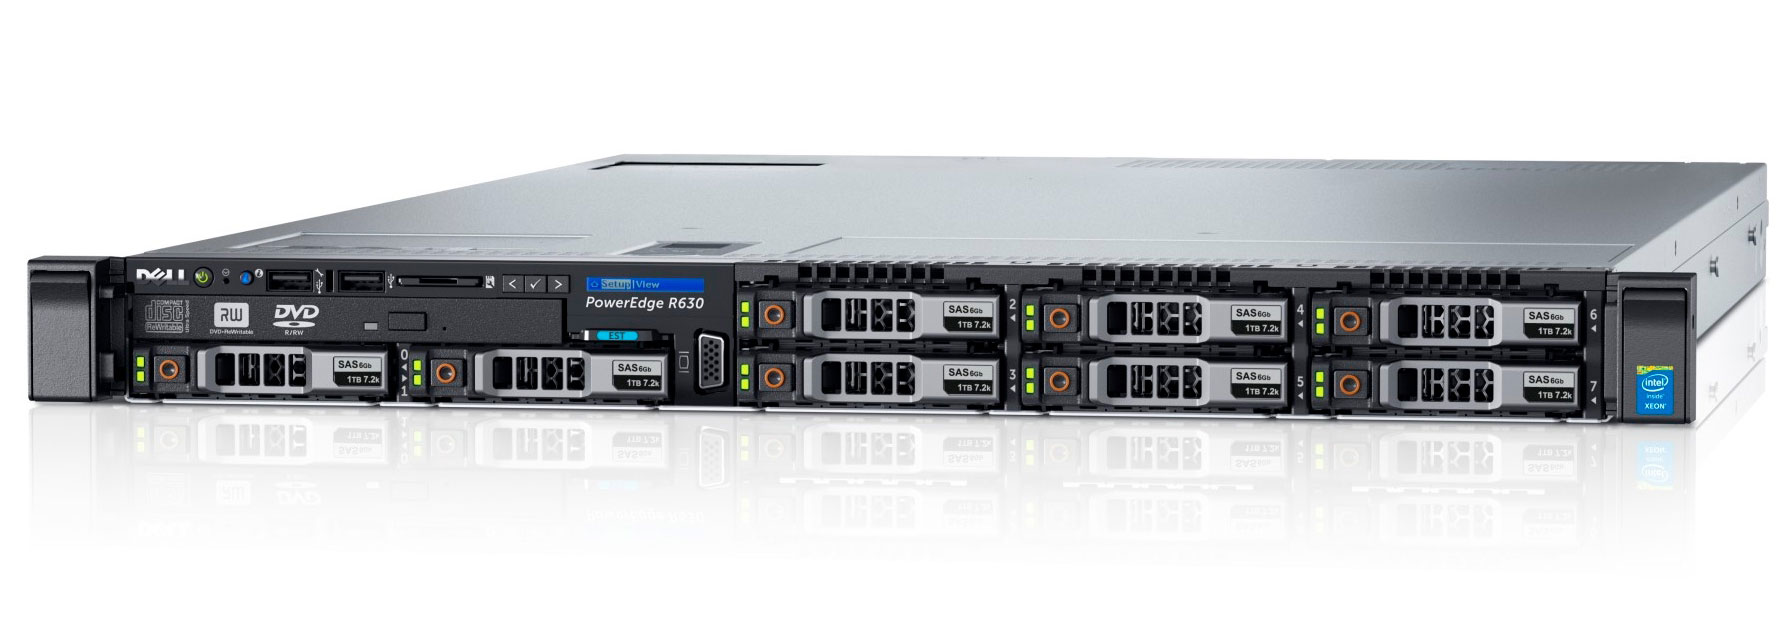 Подробное фото Сервер DELL PowerEdge R630 Xeon 2x E5-2650v4 256Gb 2133P DDR4 8x noHDD 2.5", SAS RAID Perc H730, 1024Mb, DVD, 2*PSU